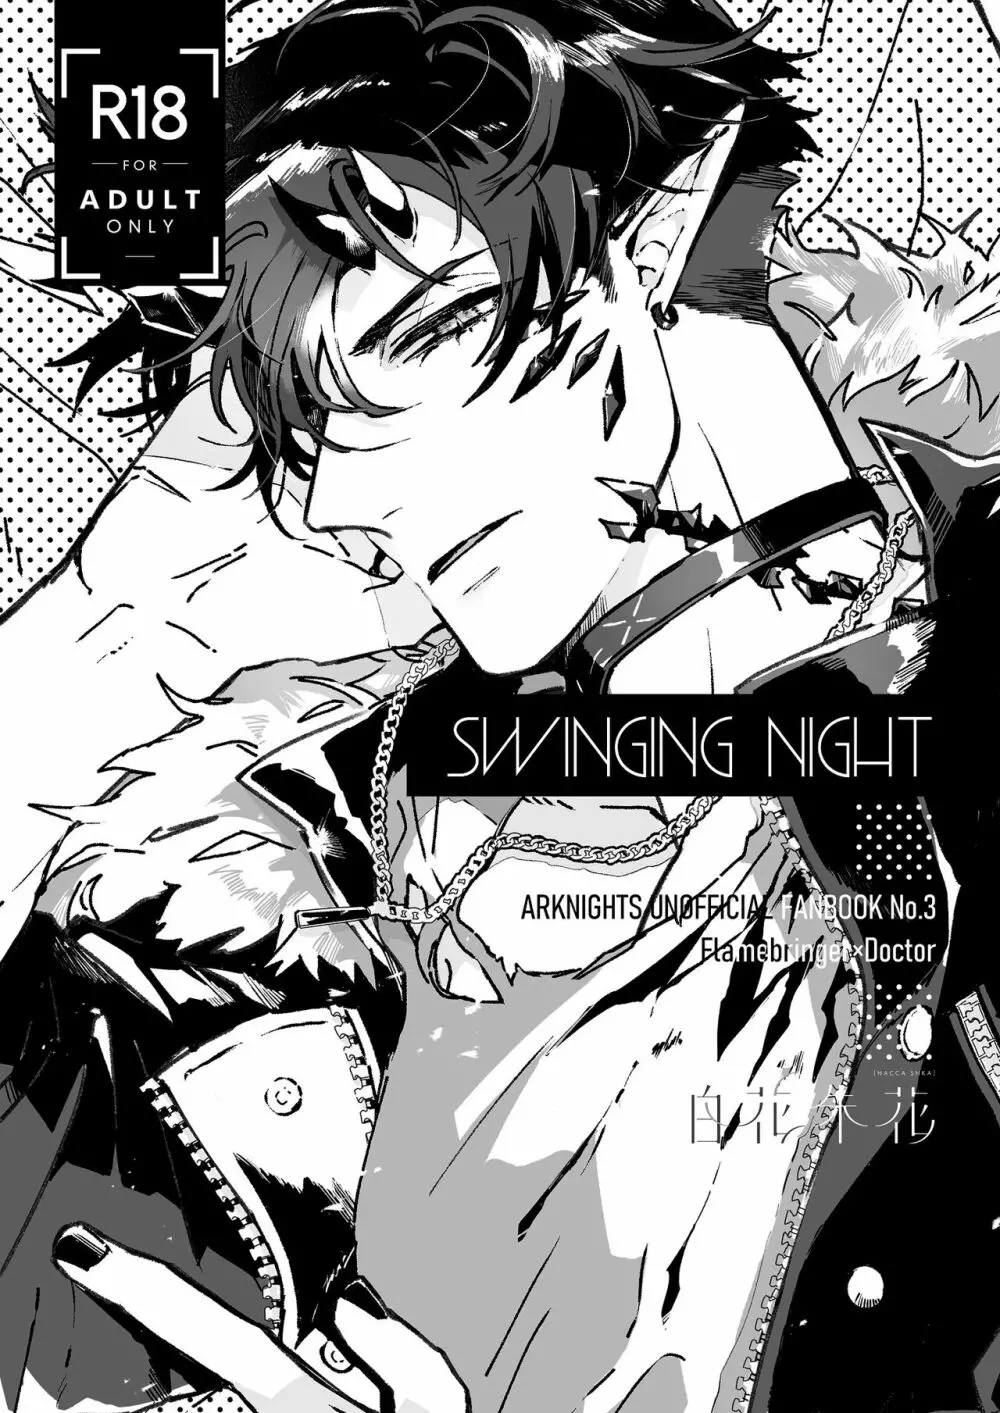 SWINGING NIGHT - page1